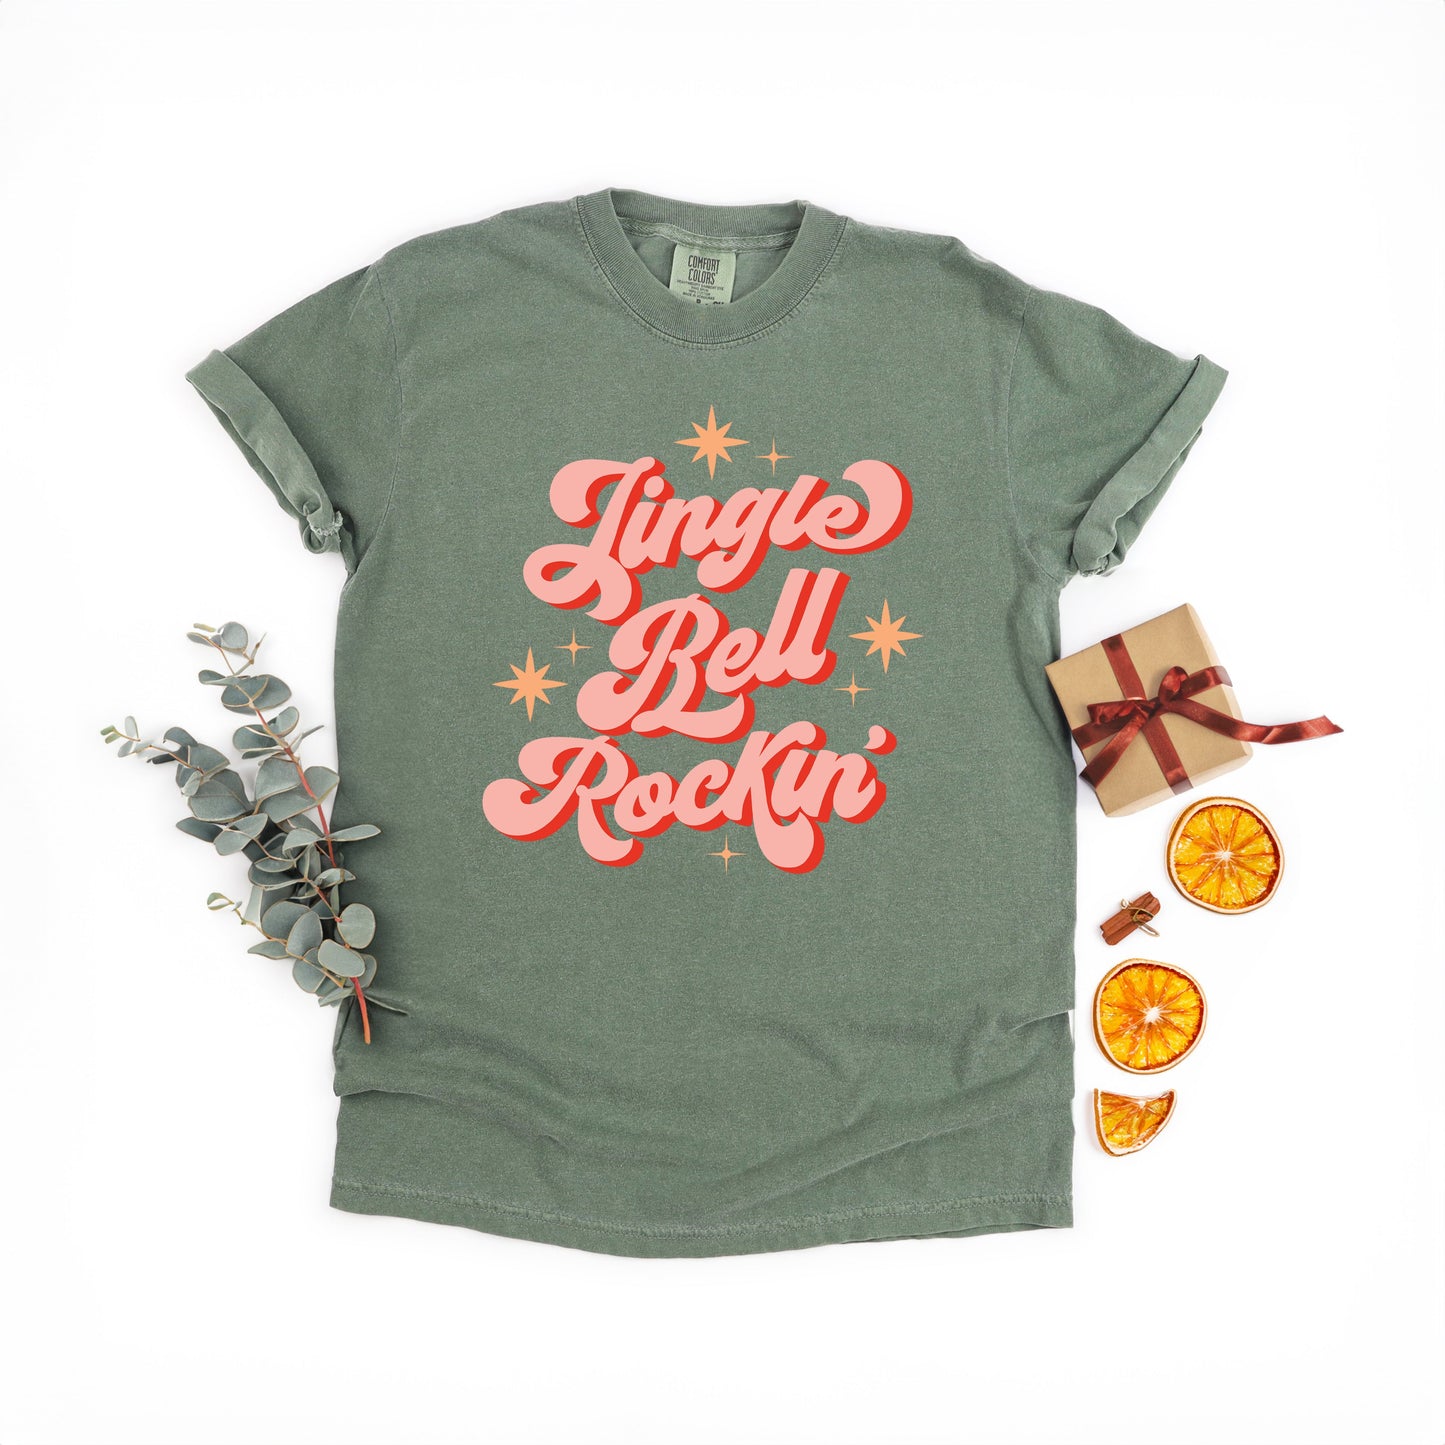 Clearance Jingle Bell Rockin' | Garment Dyed Tee